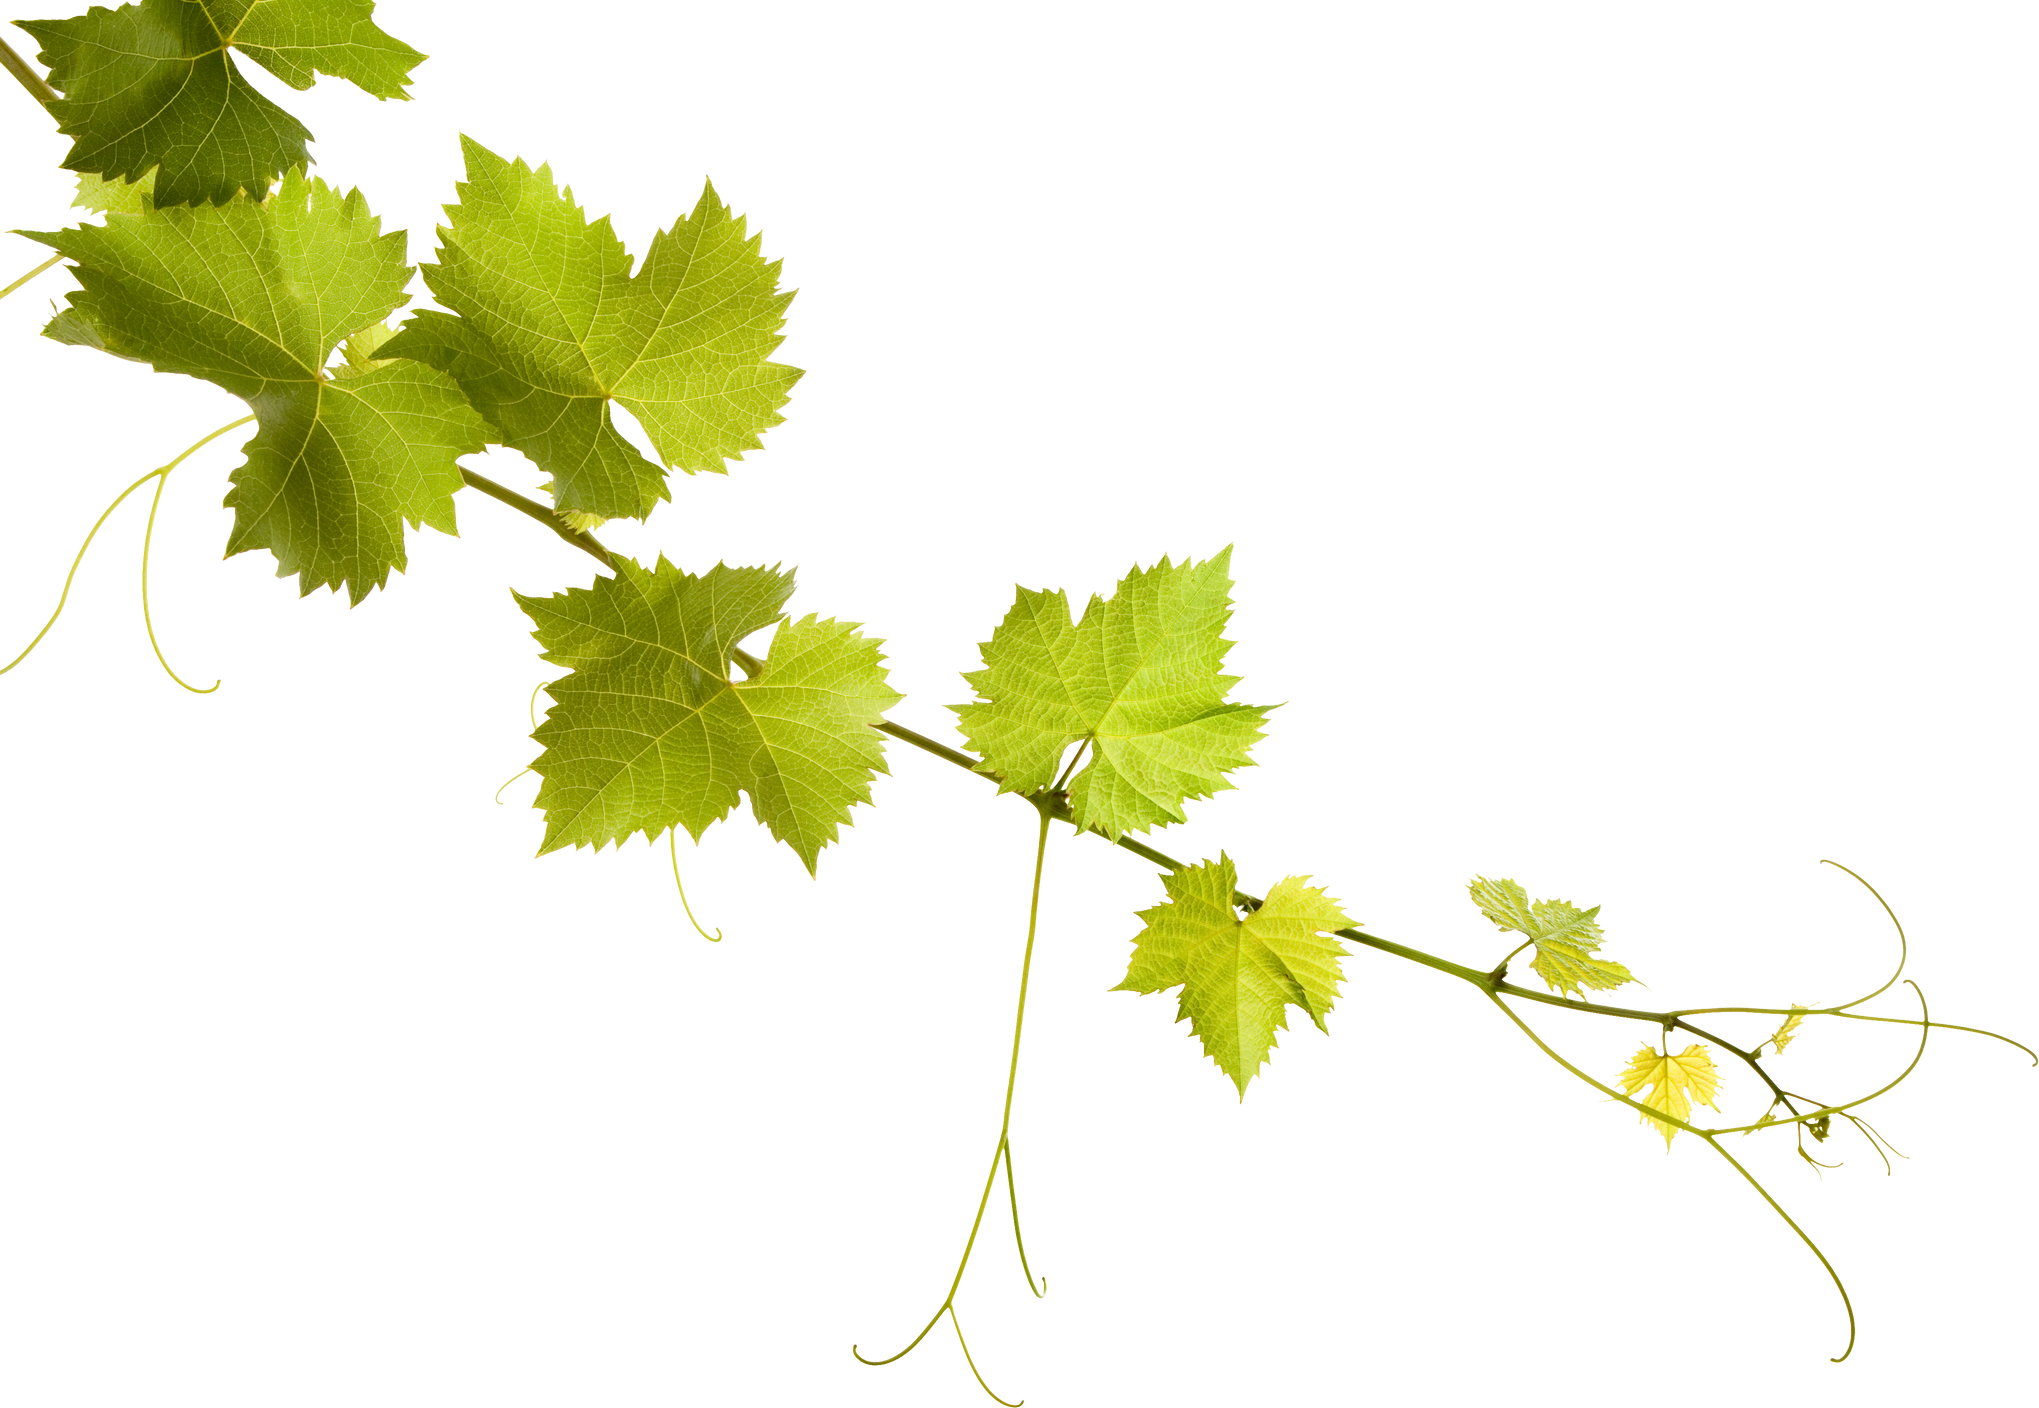 Grapevine Leaves Cutout 